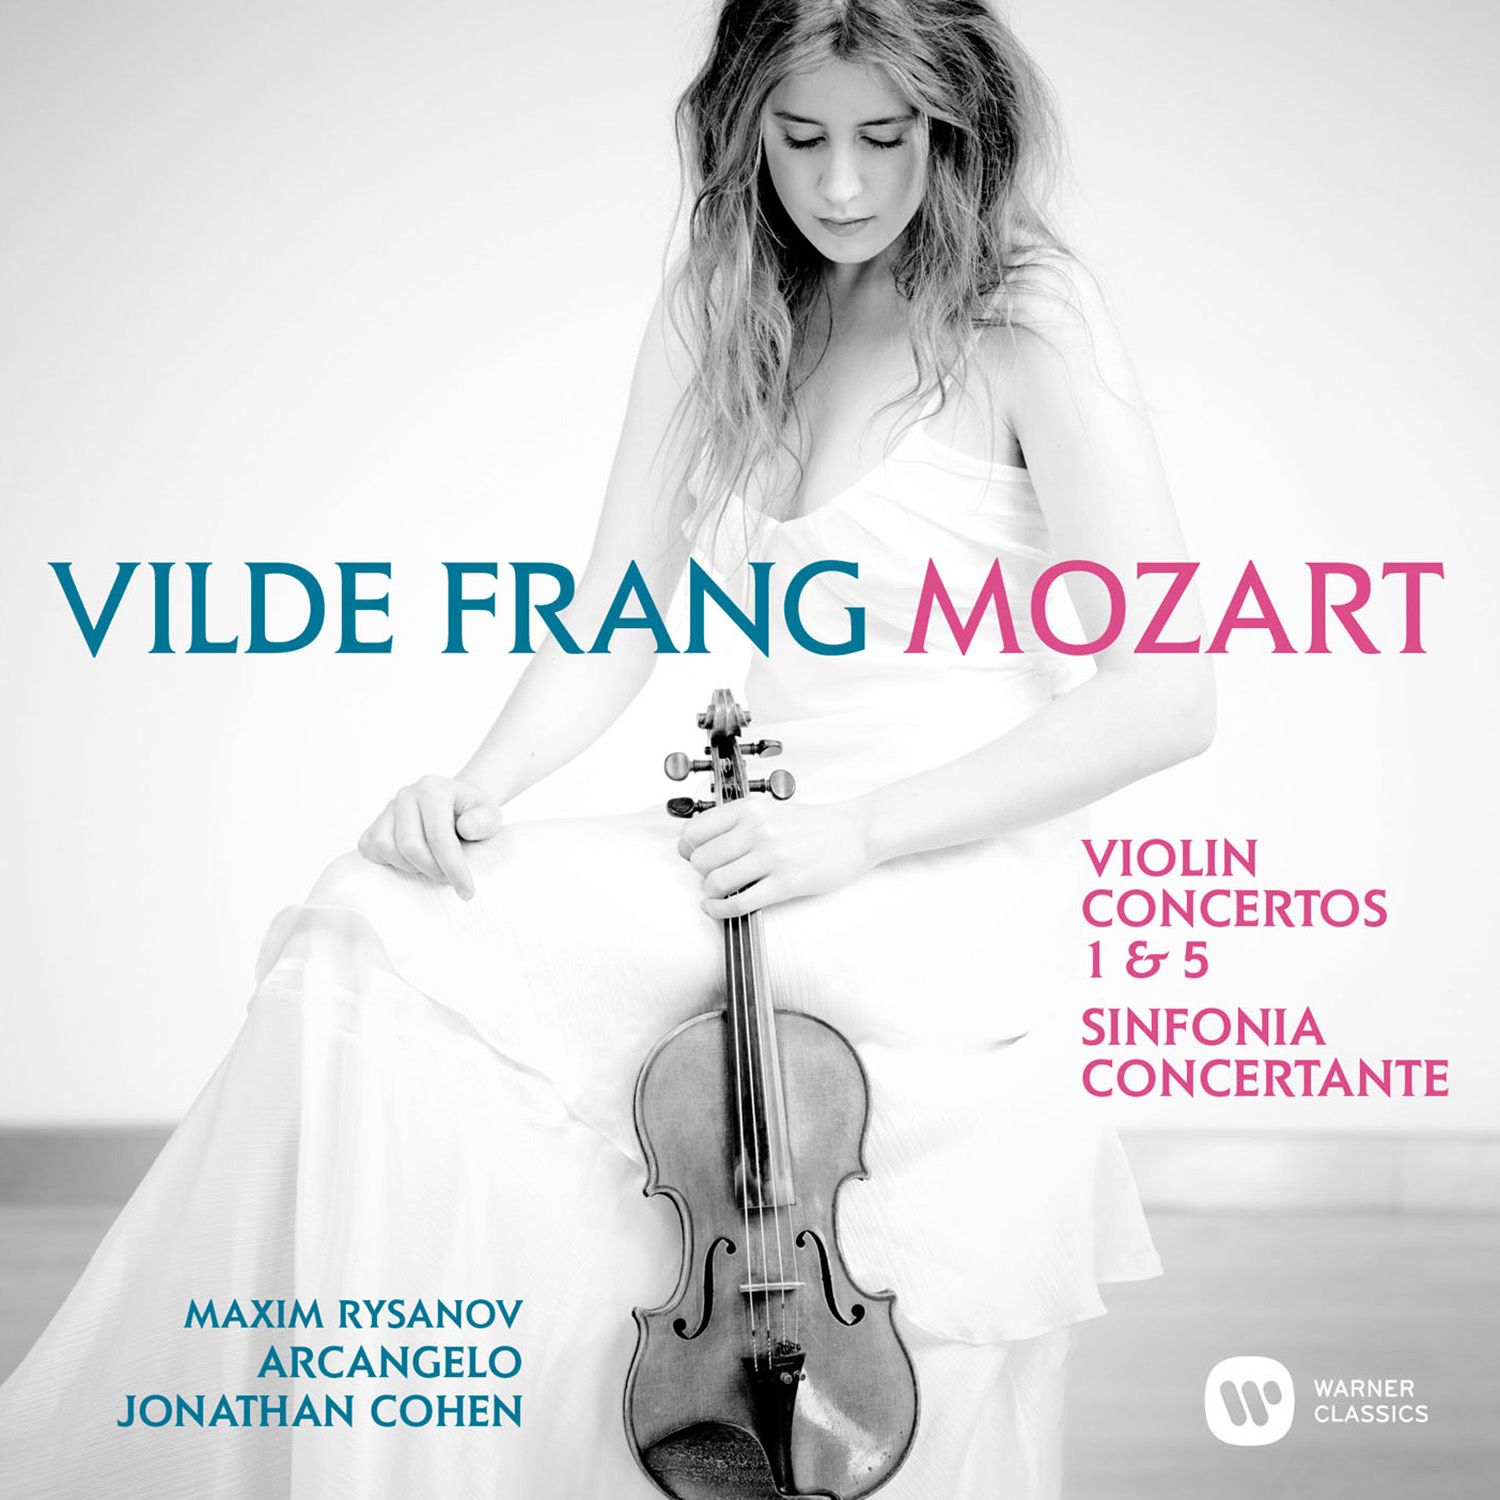 Violin Concerto No. 5 in A Major, K. 219:I. Allegro aperto